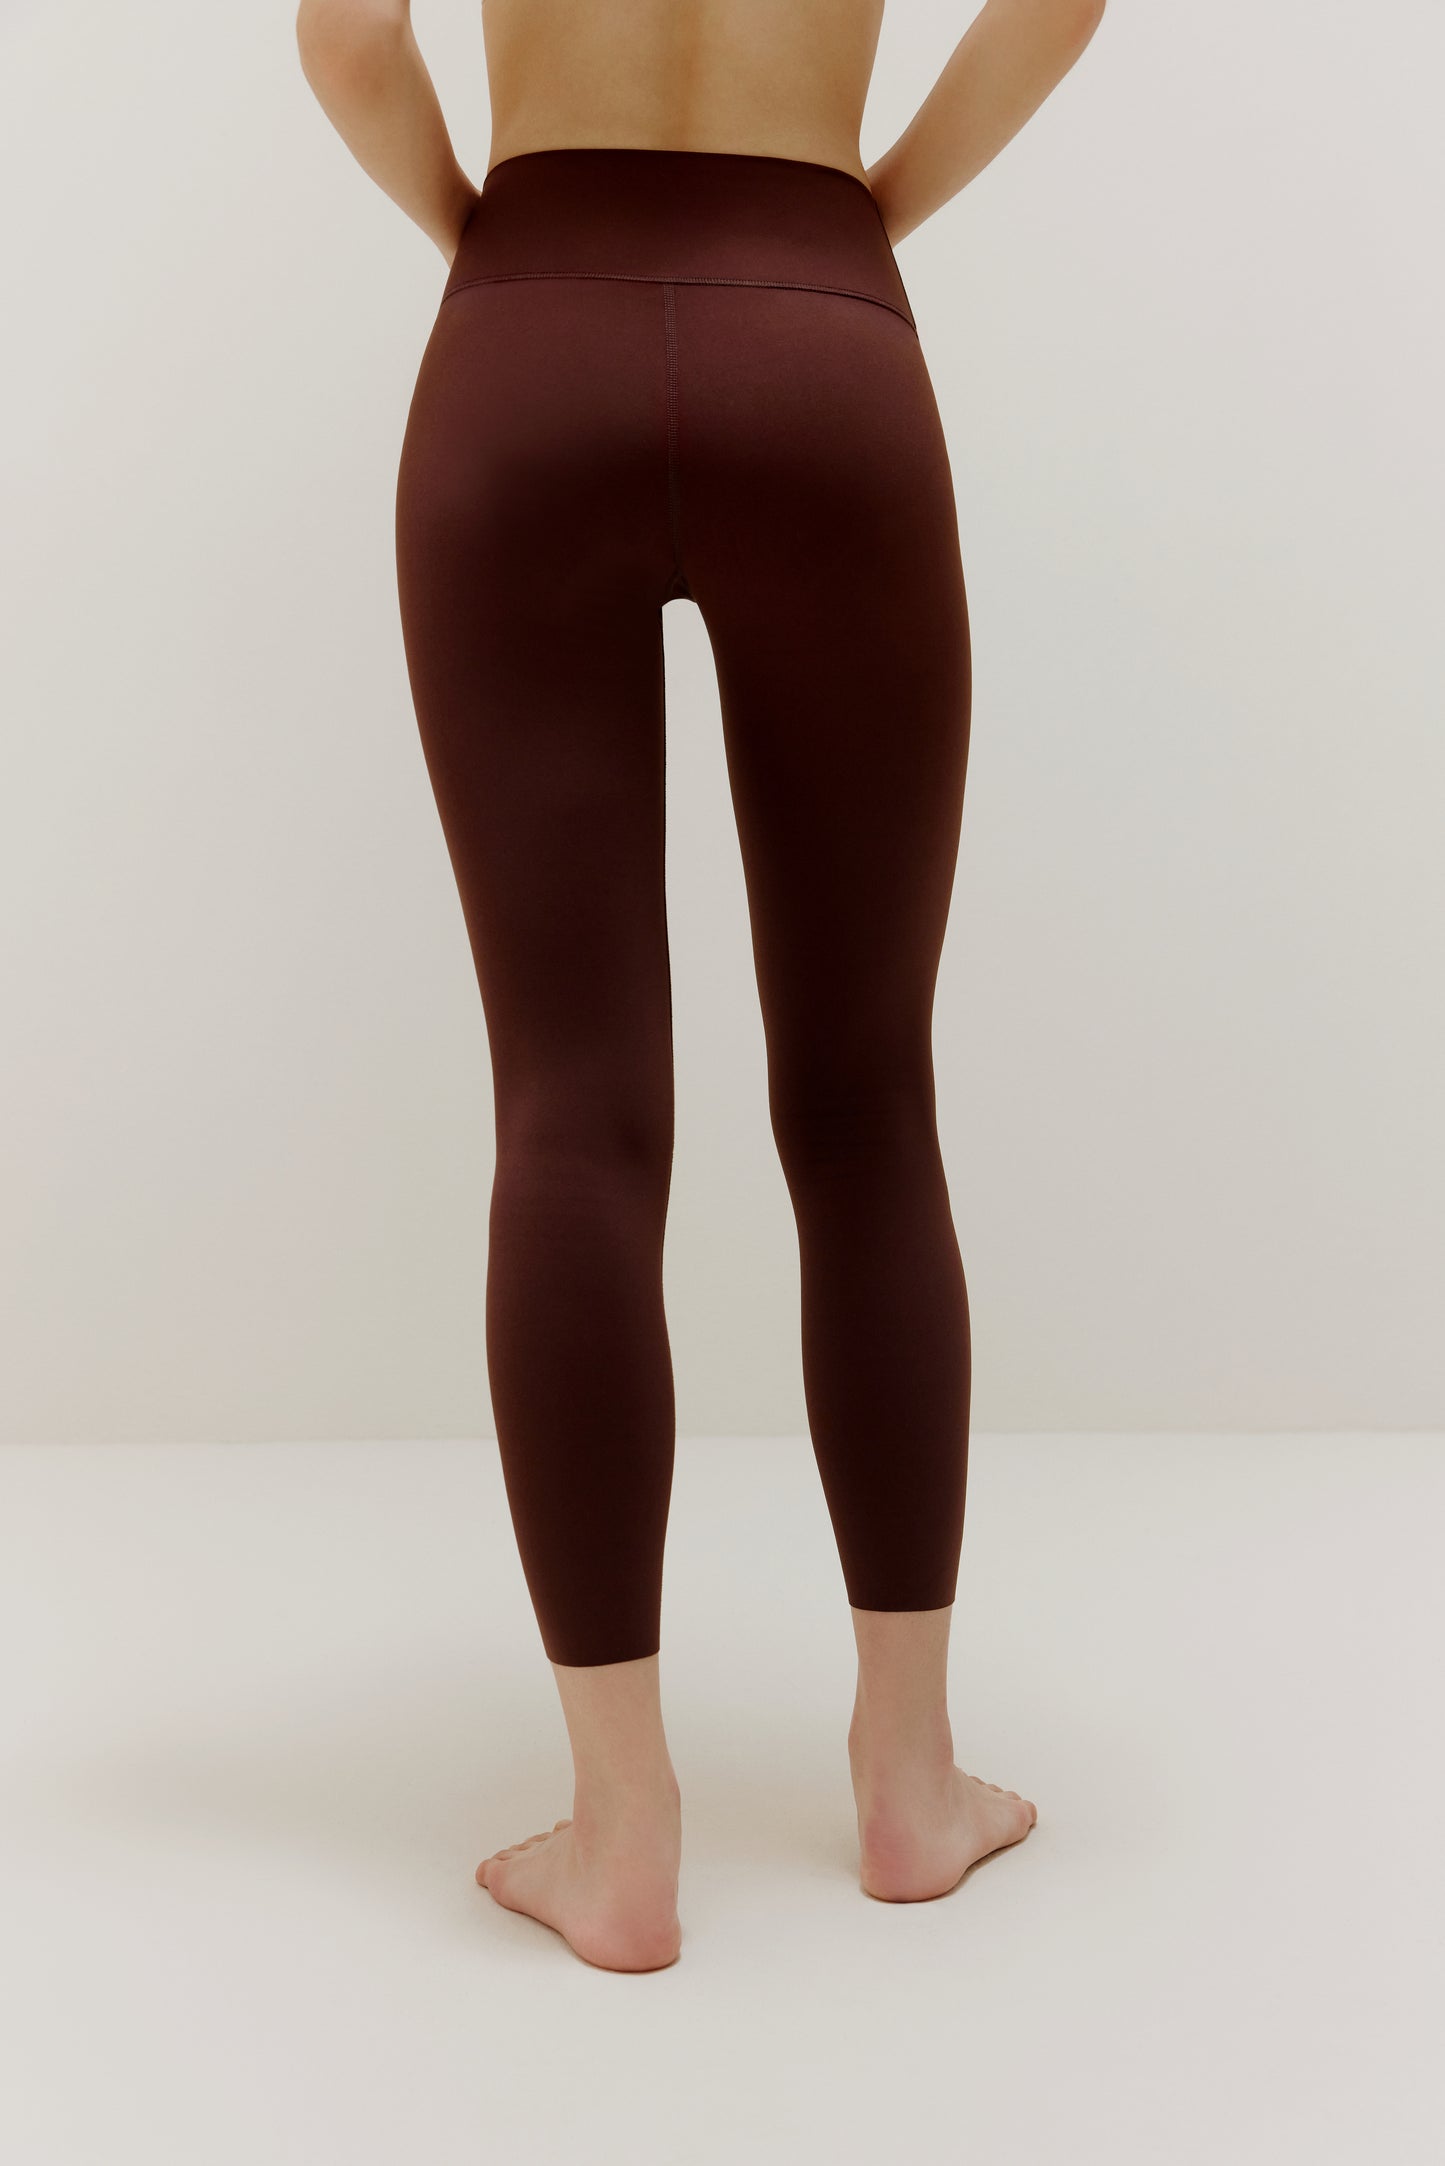 Back view of woman wearing brown leggings